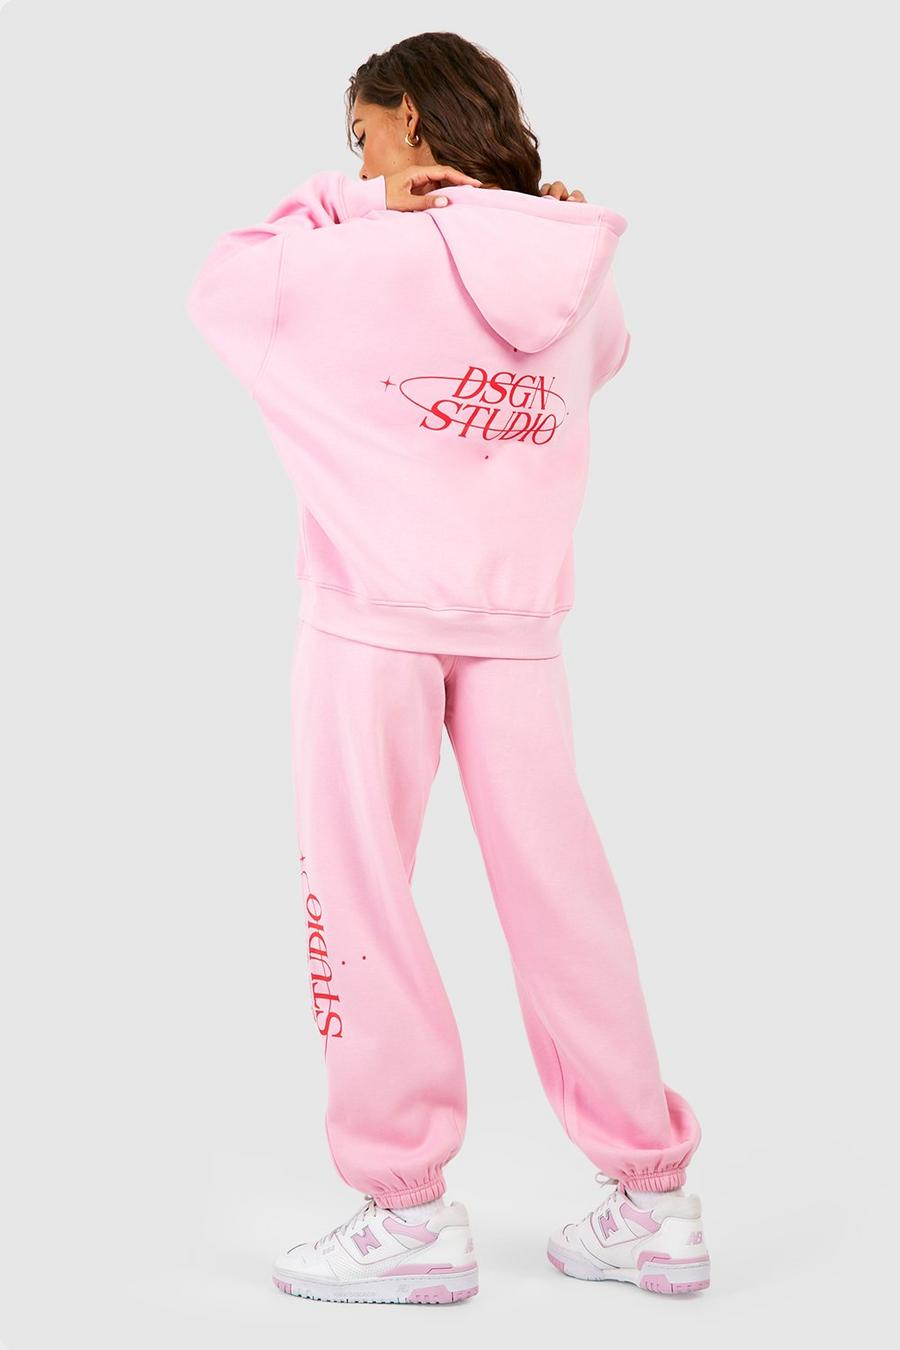 Chándal con capucha y eslogan Dsgn Studio, Light pink image number 1